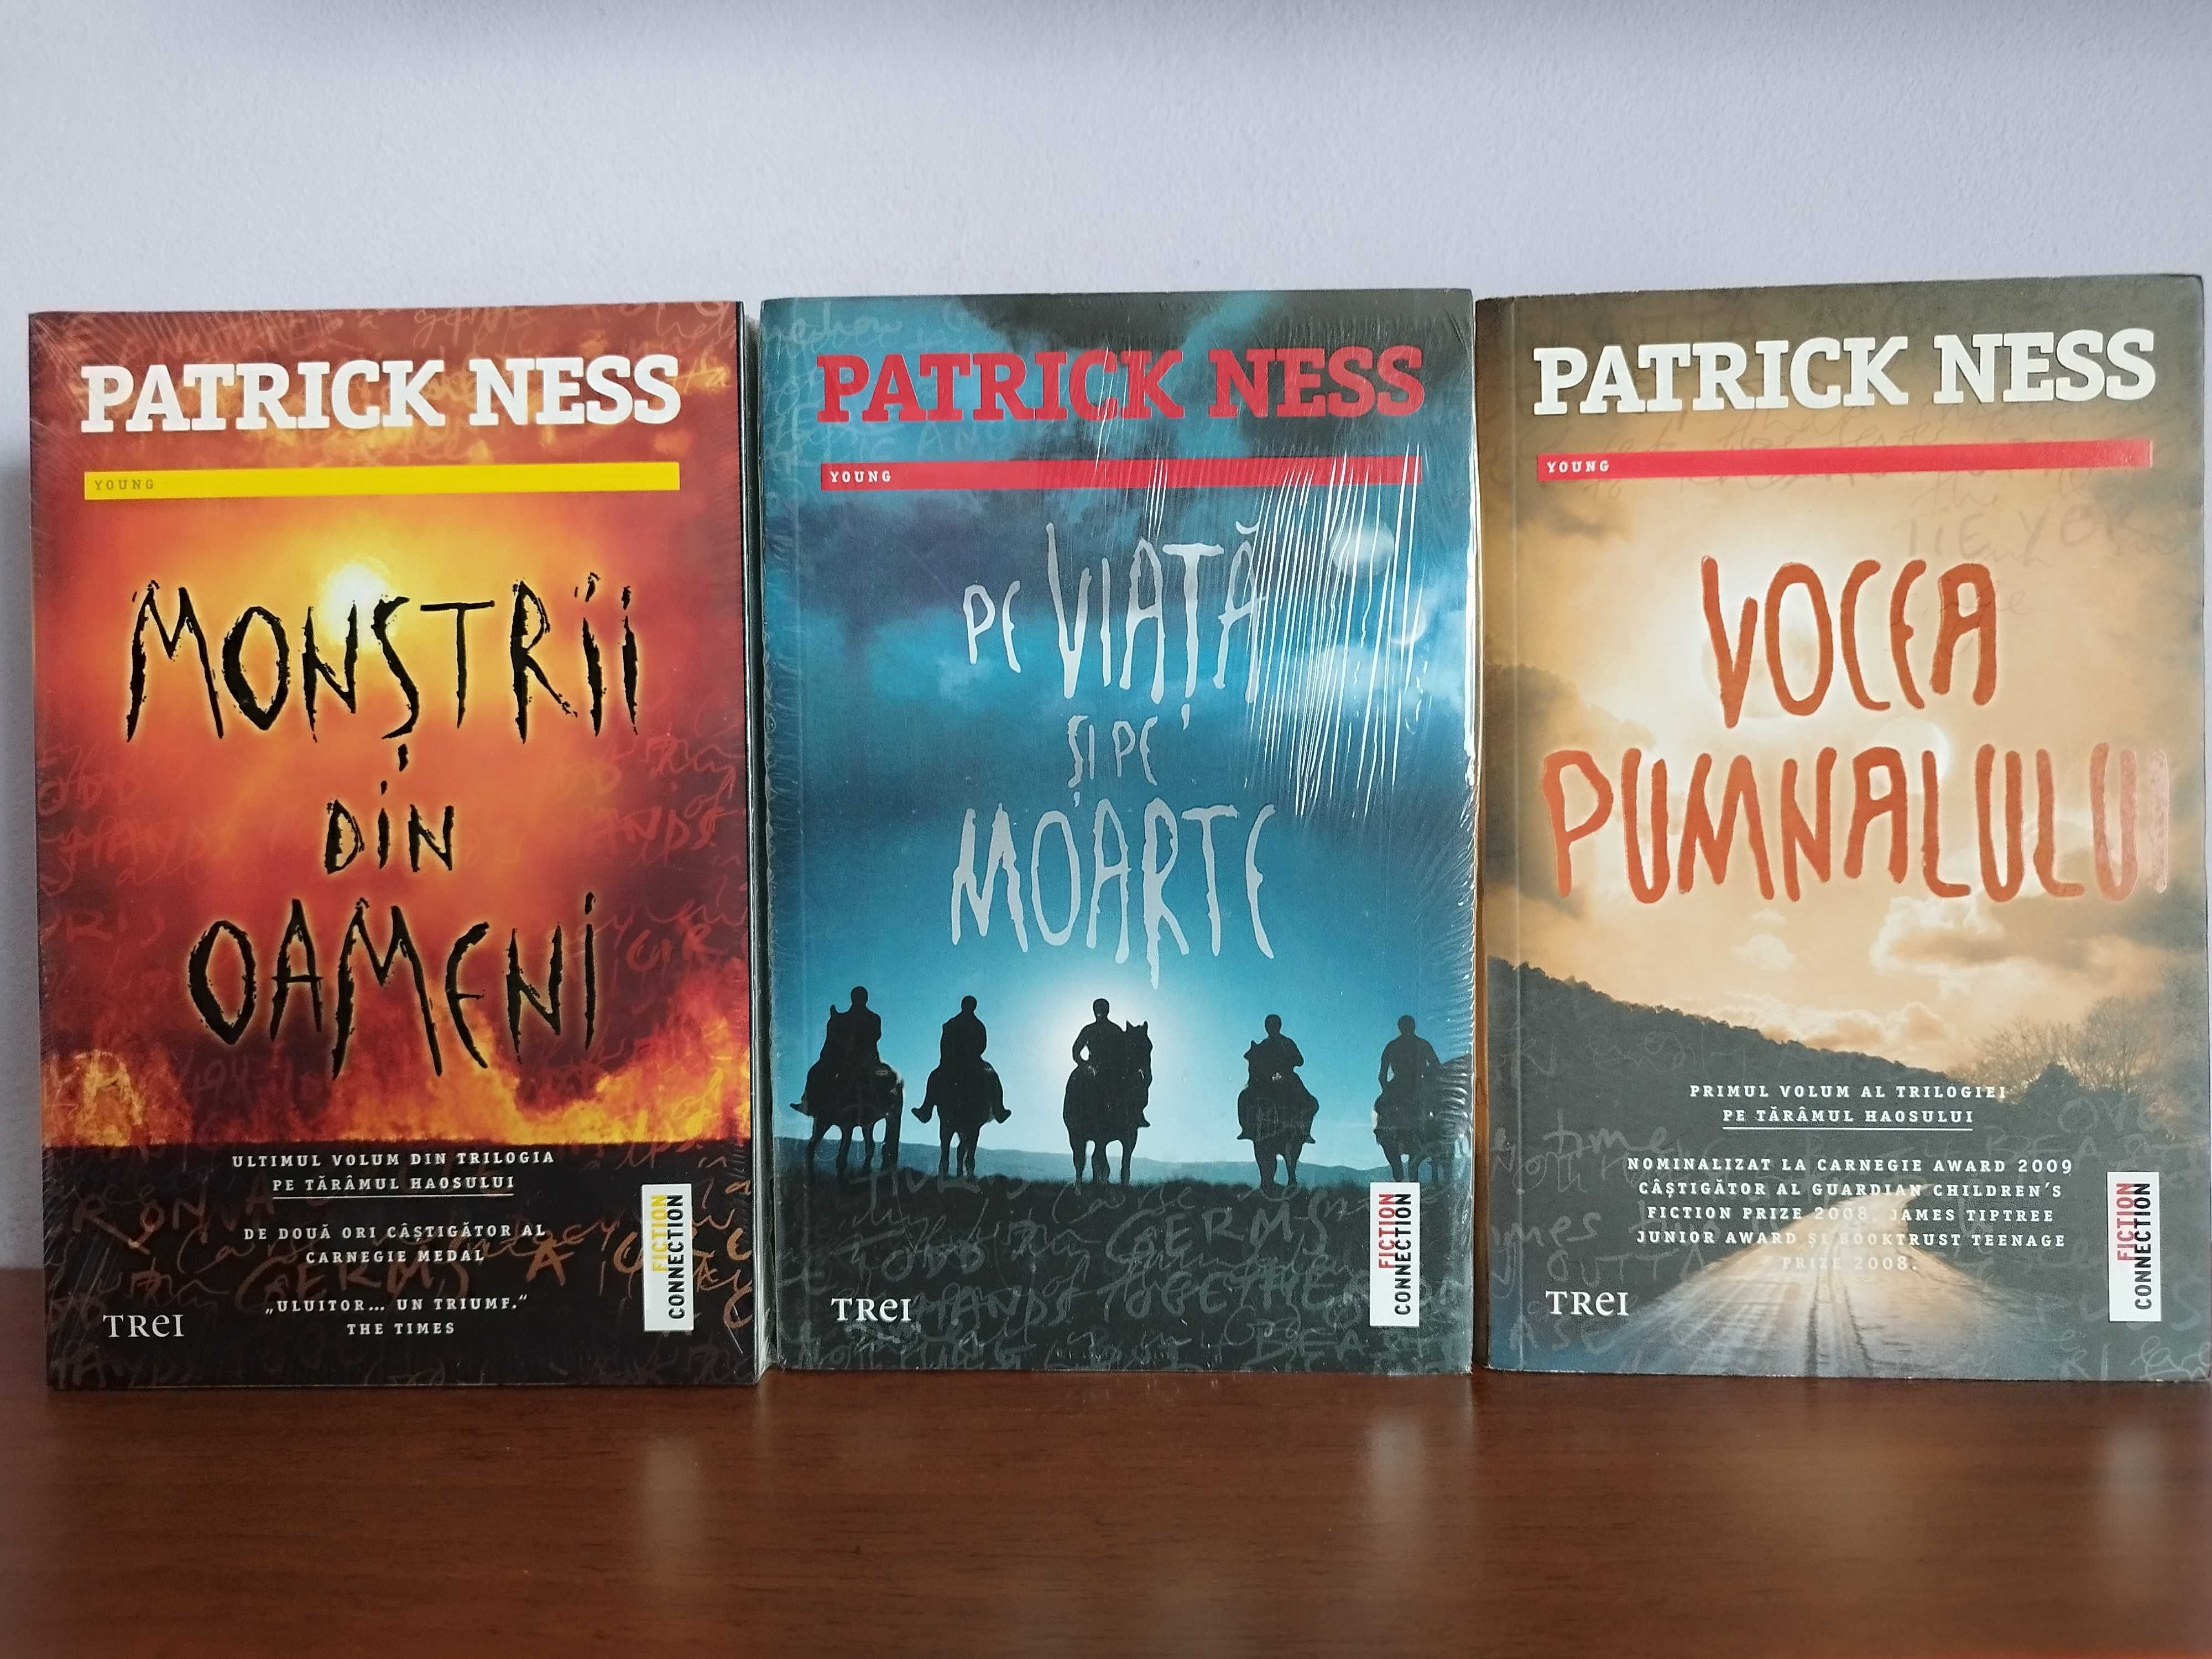 Patrick Ness - trilogia "Pe taramul haosului" (Chaos Walking)